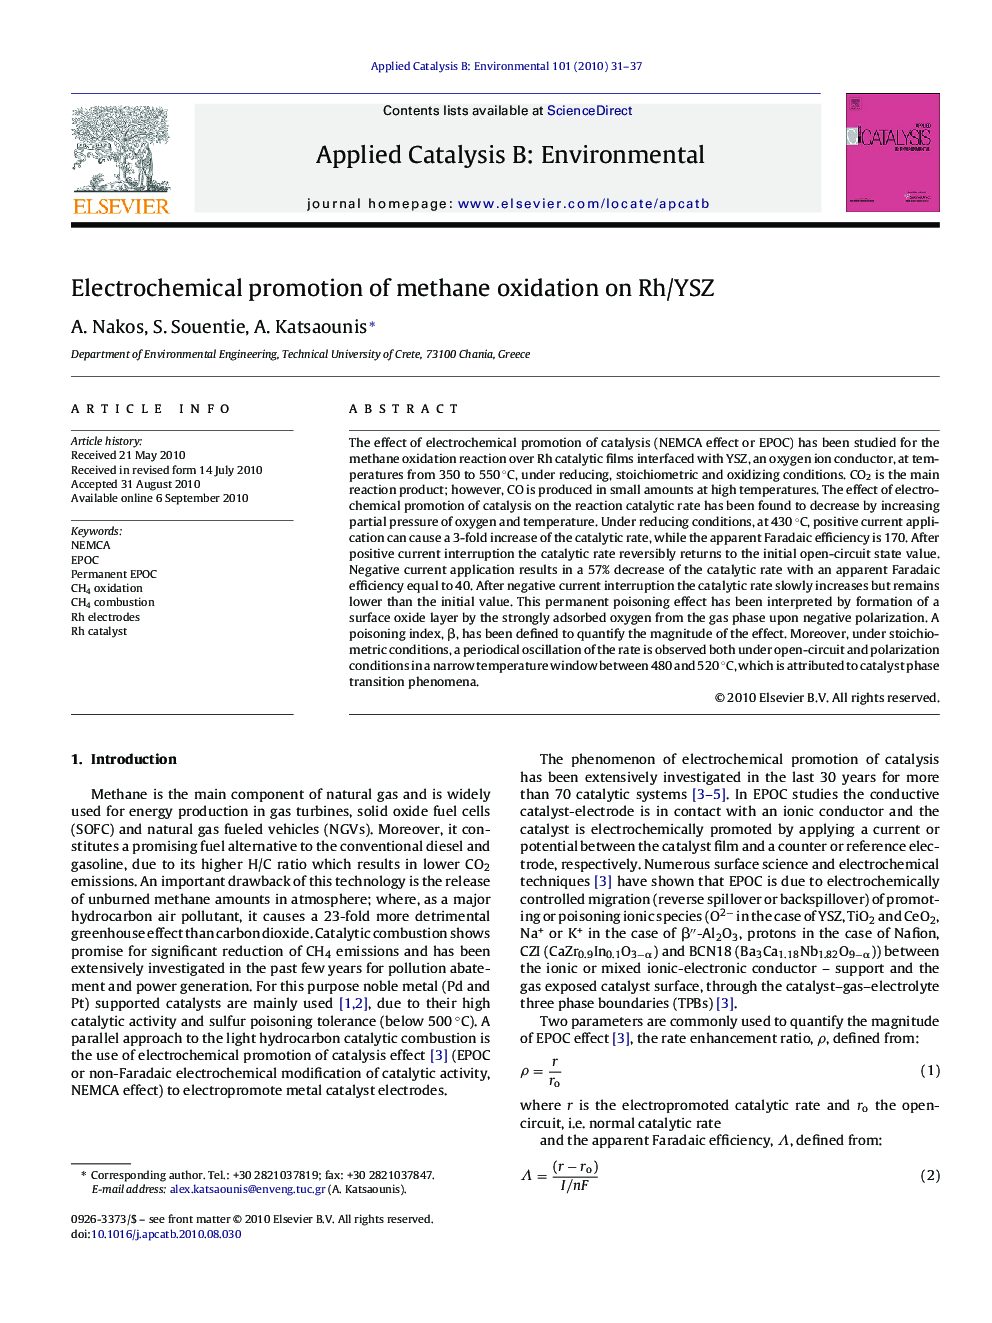 Electrochemical promotion of methane oxidation on Rh/YSZ